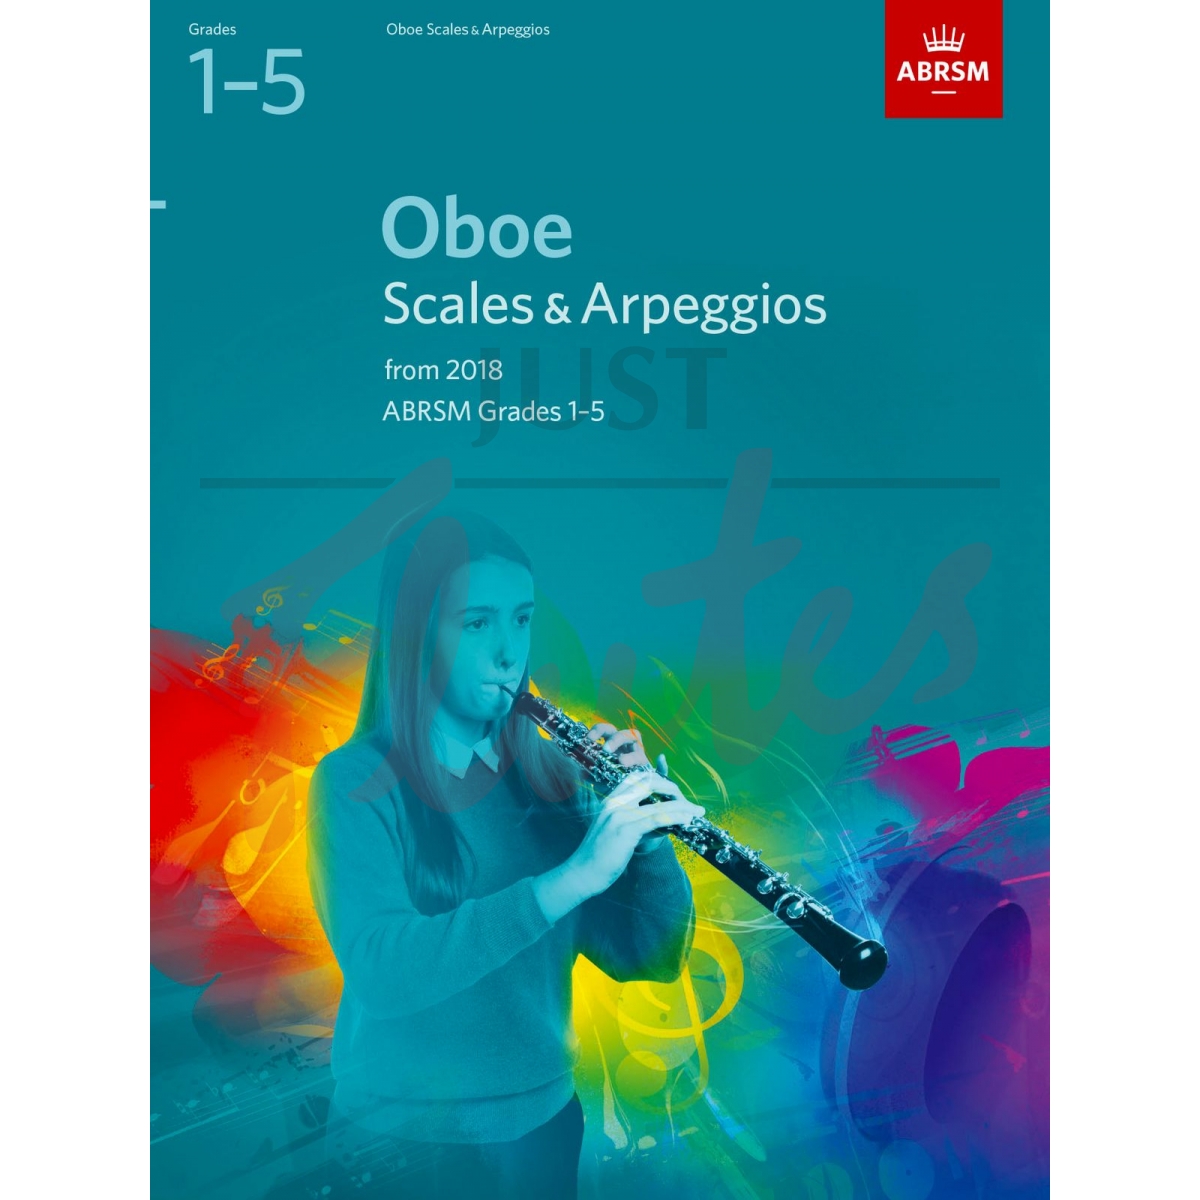 Scales &amp; Arpeggios Grades 1-5 (from 2018) [Oboe]